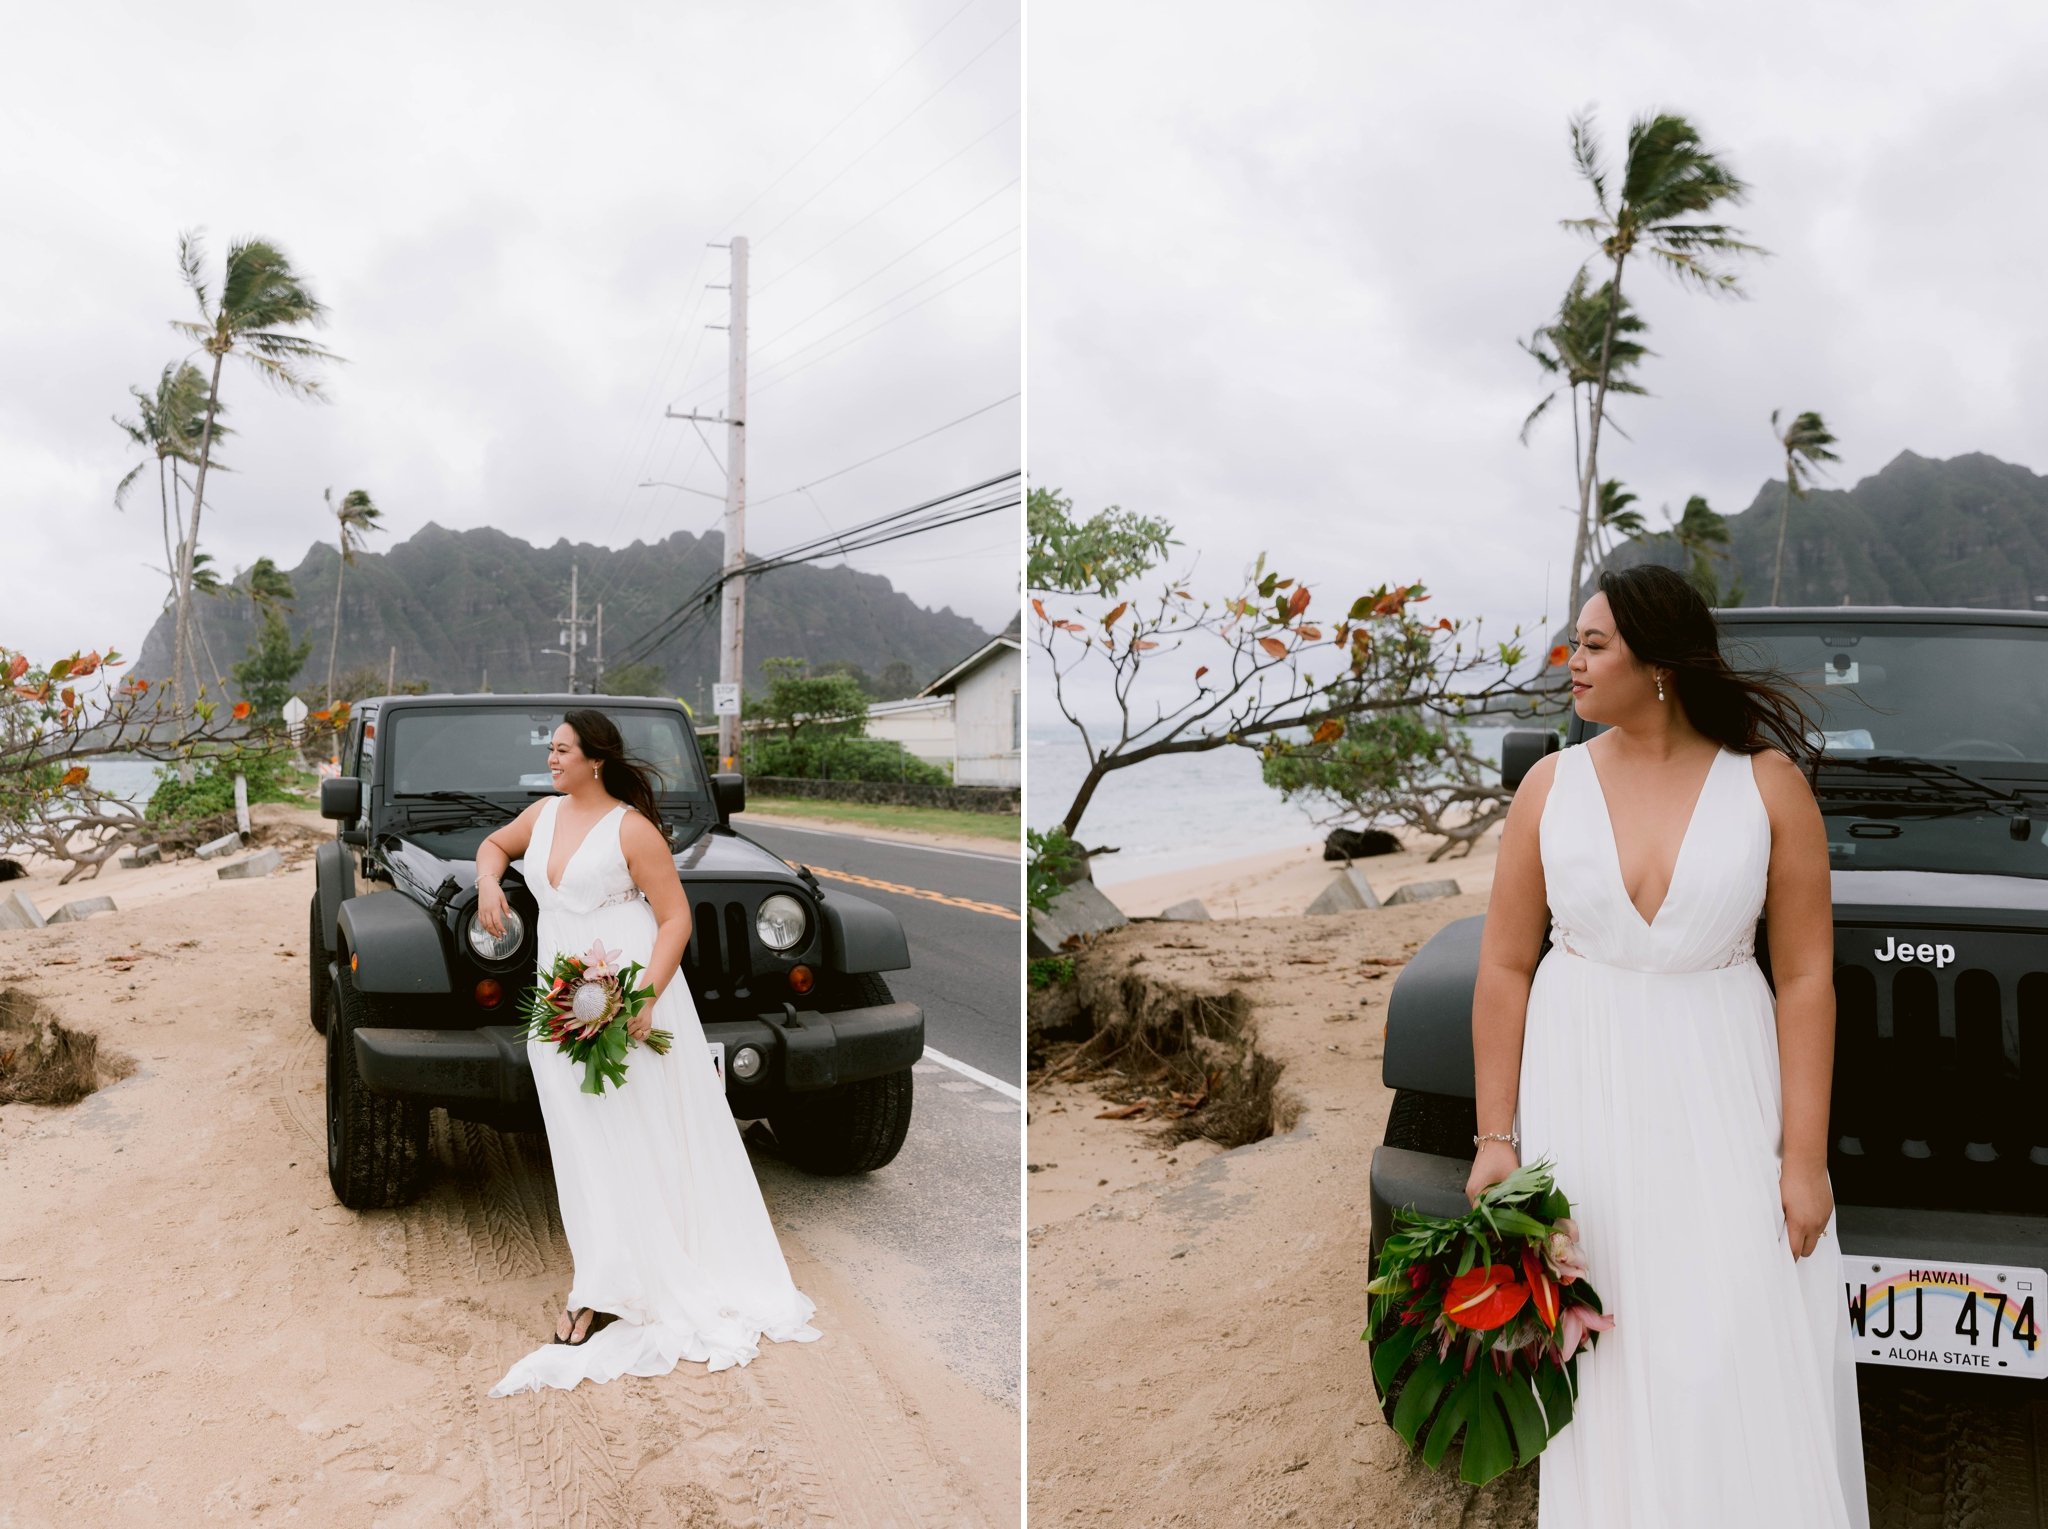 Jeep Adventure - Elopement at Kaaawa Beach - Oahu Hawaii Wedding Photographer 